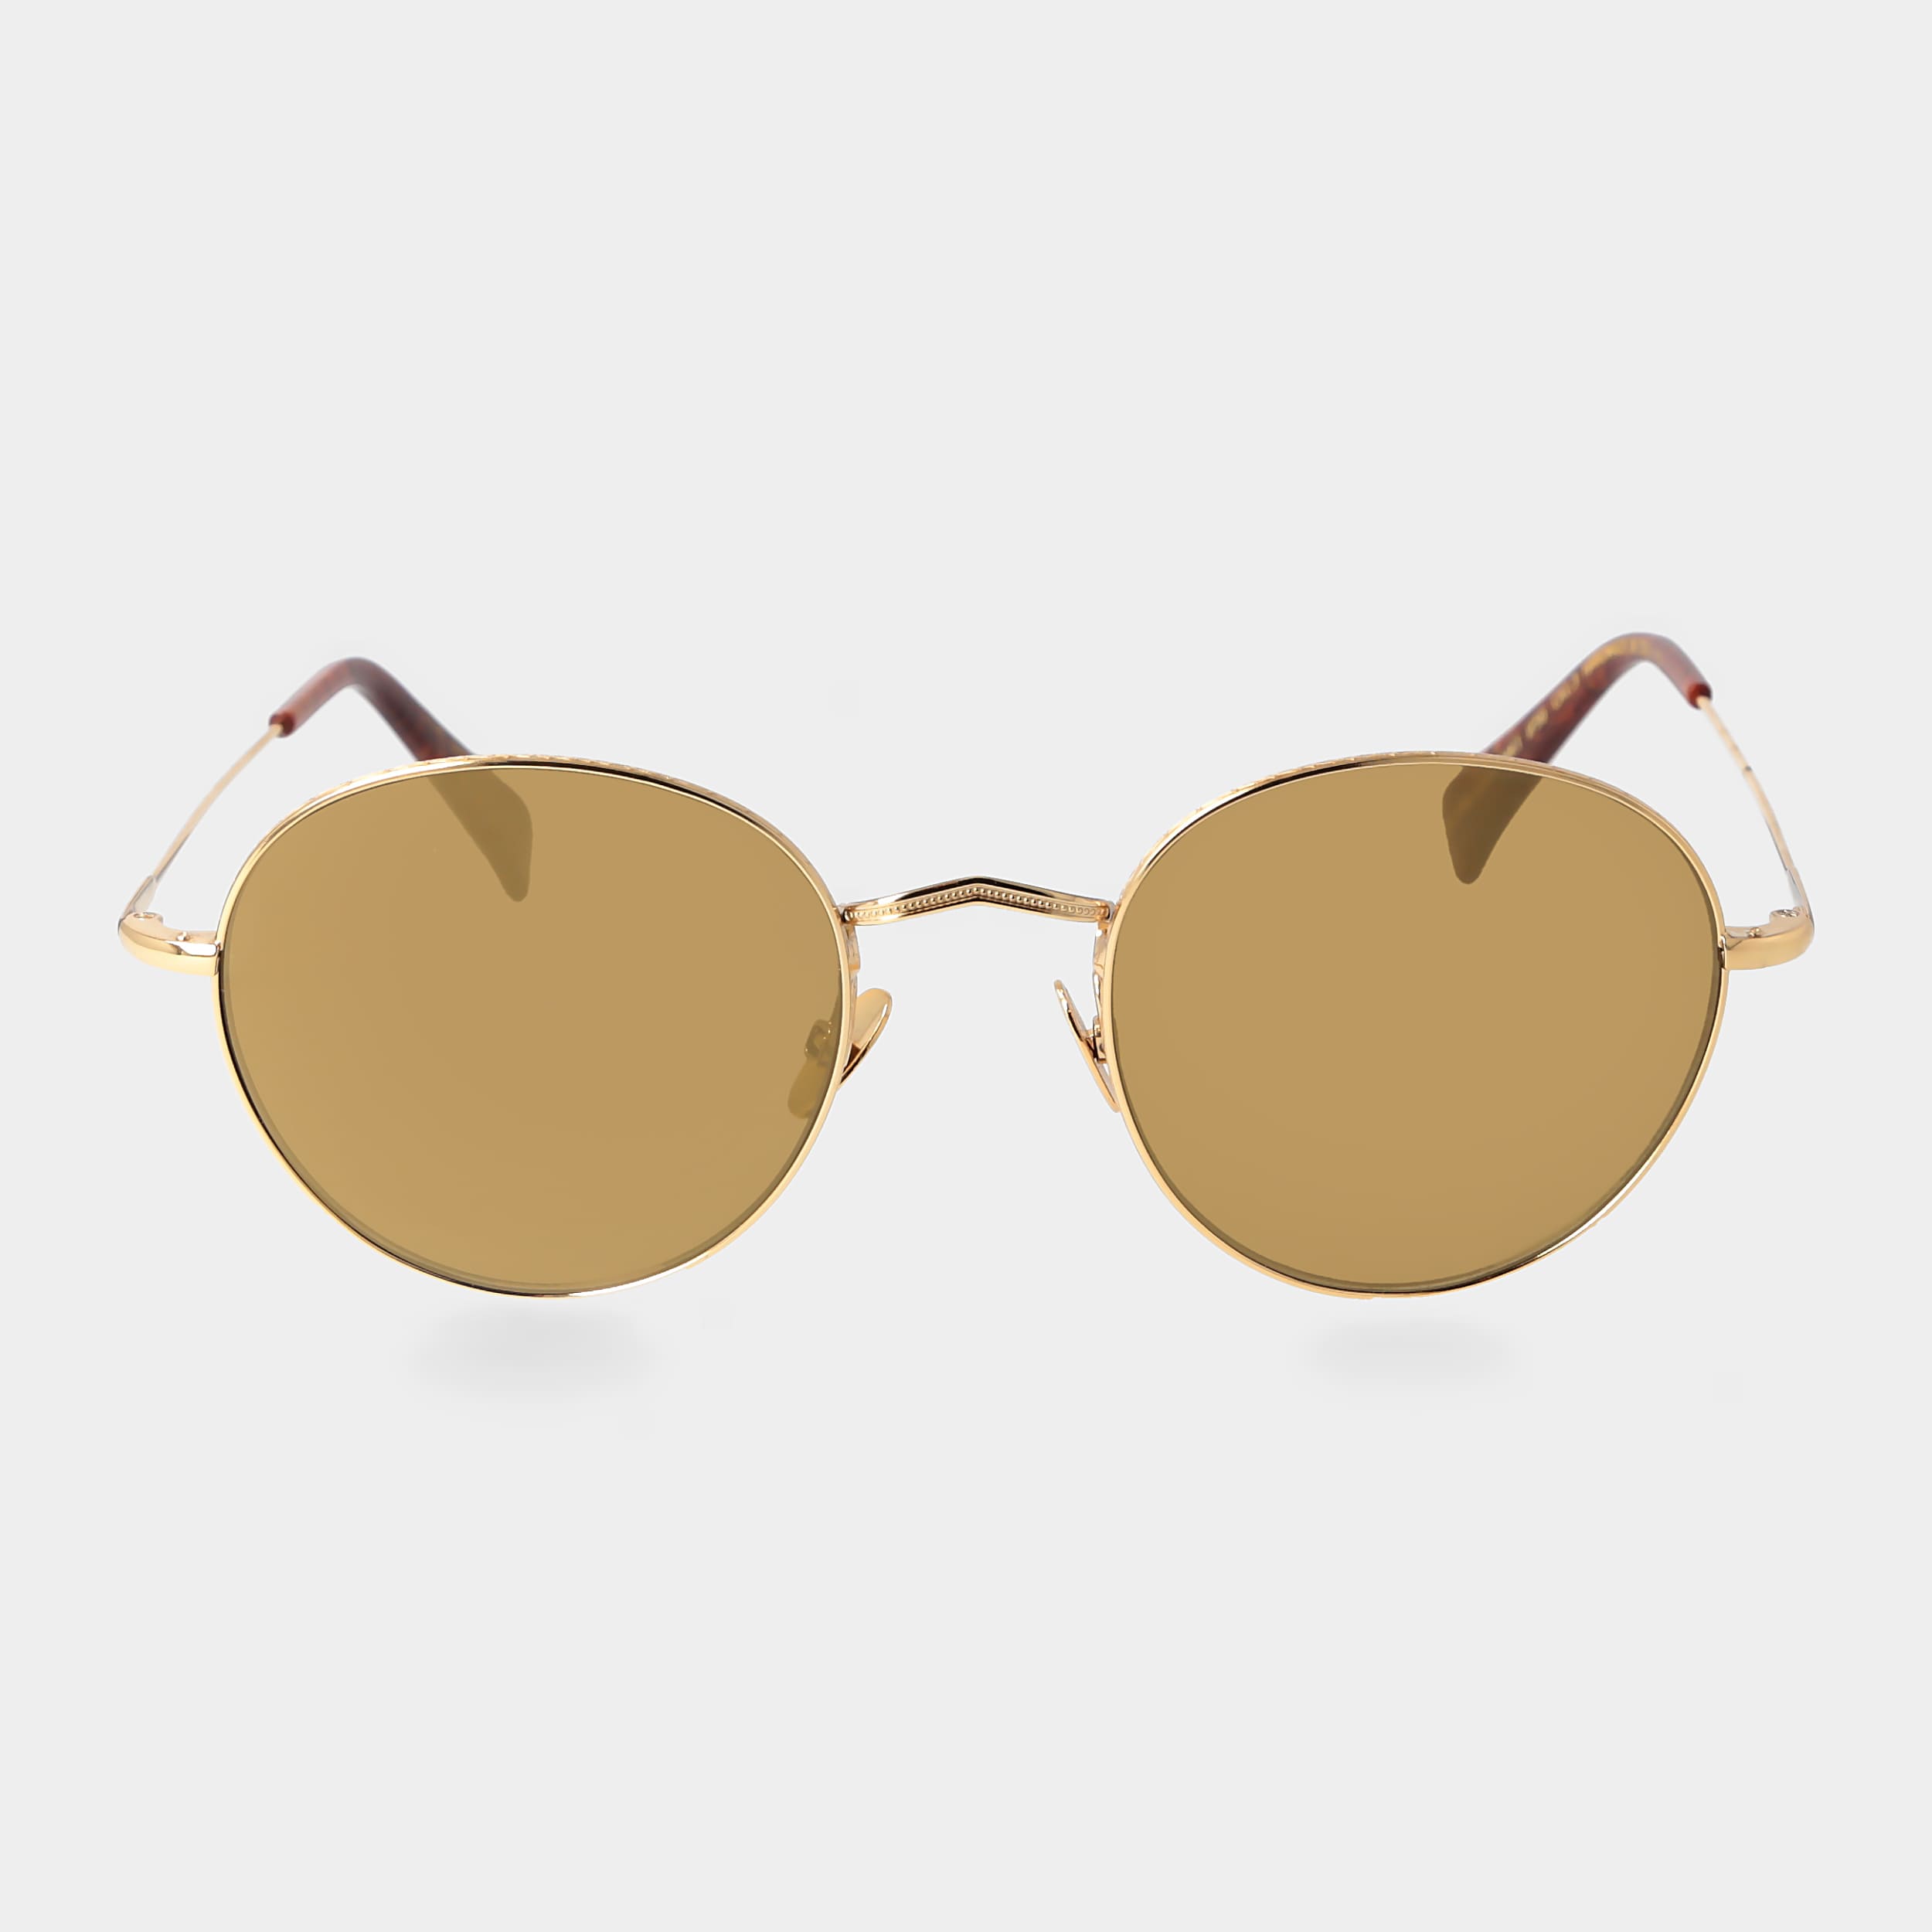 sunglasses-vicuna-k-gold-tobacco-tbd-eyewear-front